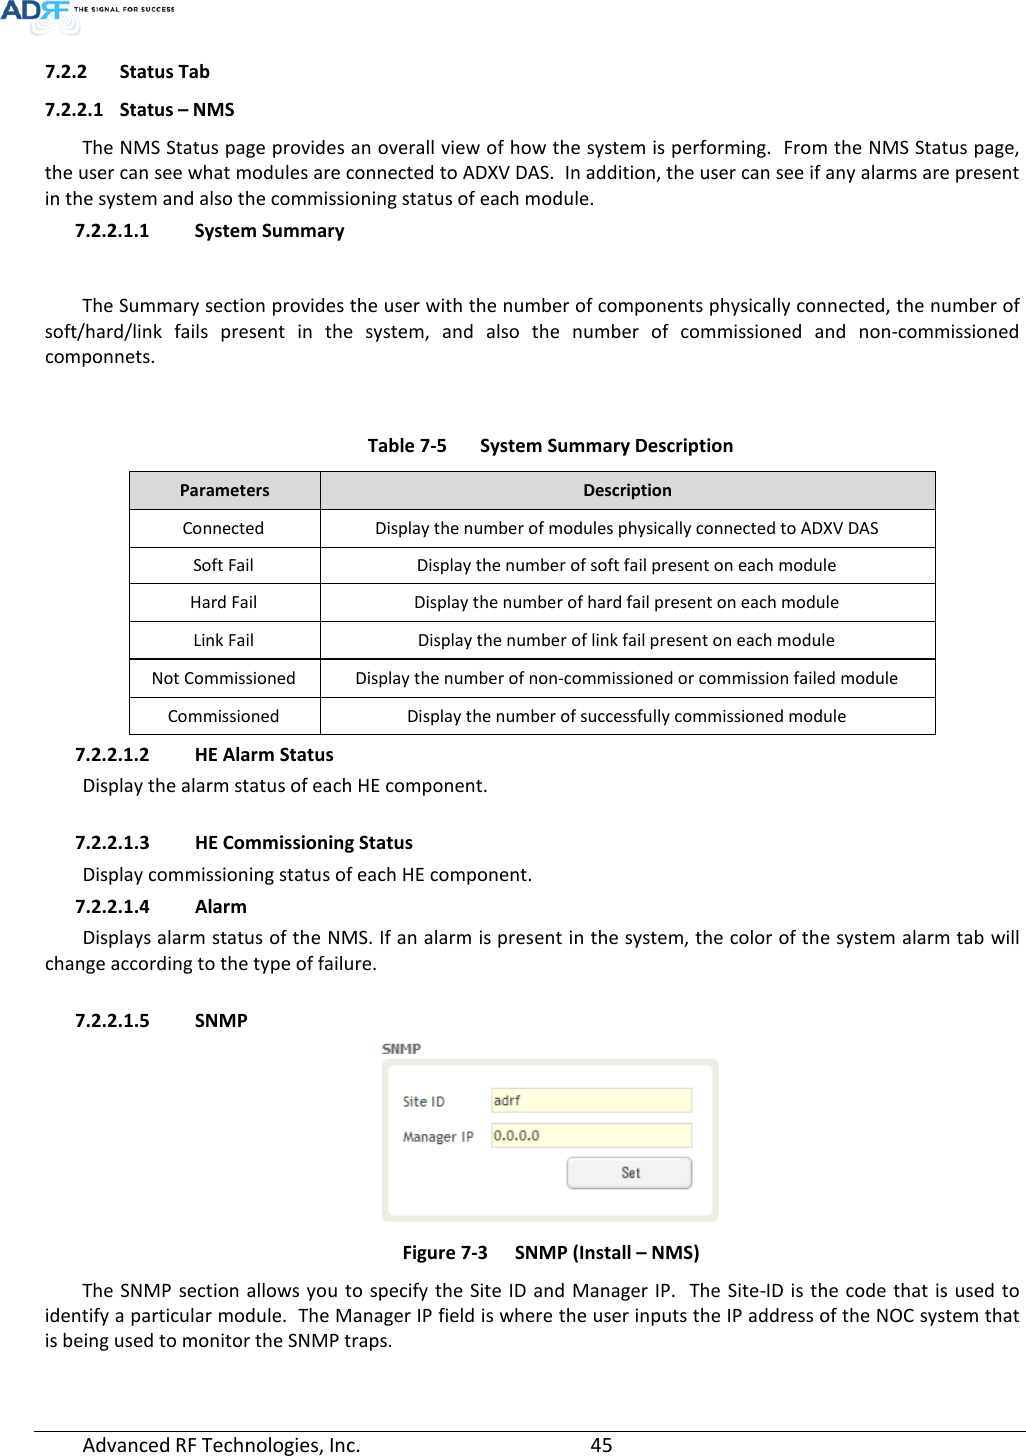 Page 45 of ADRF KOREA ADXV DAS(Distributed Antenna System) User Manual ADXV DAS